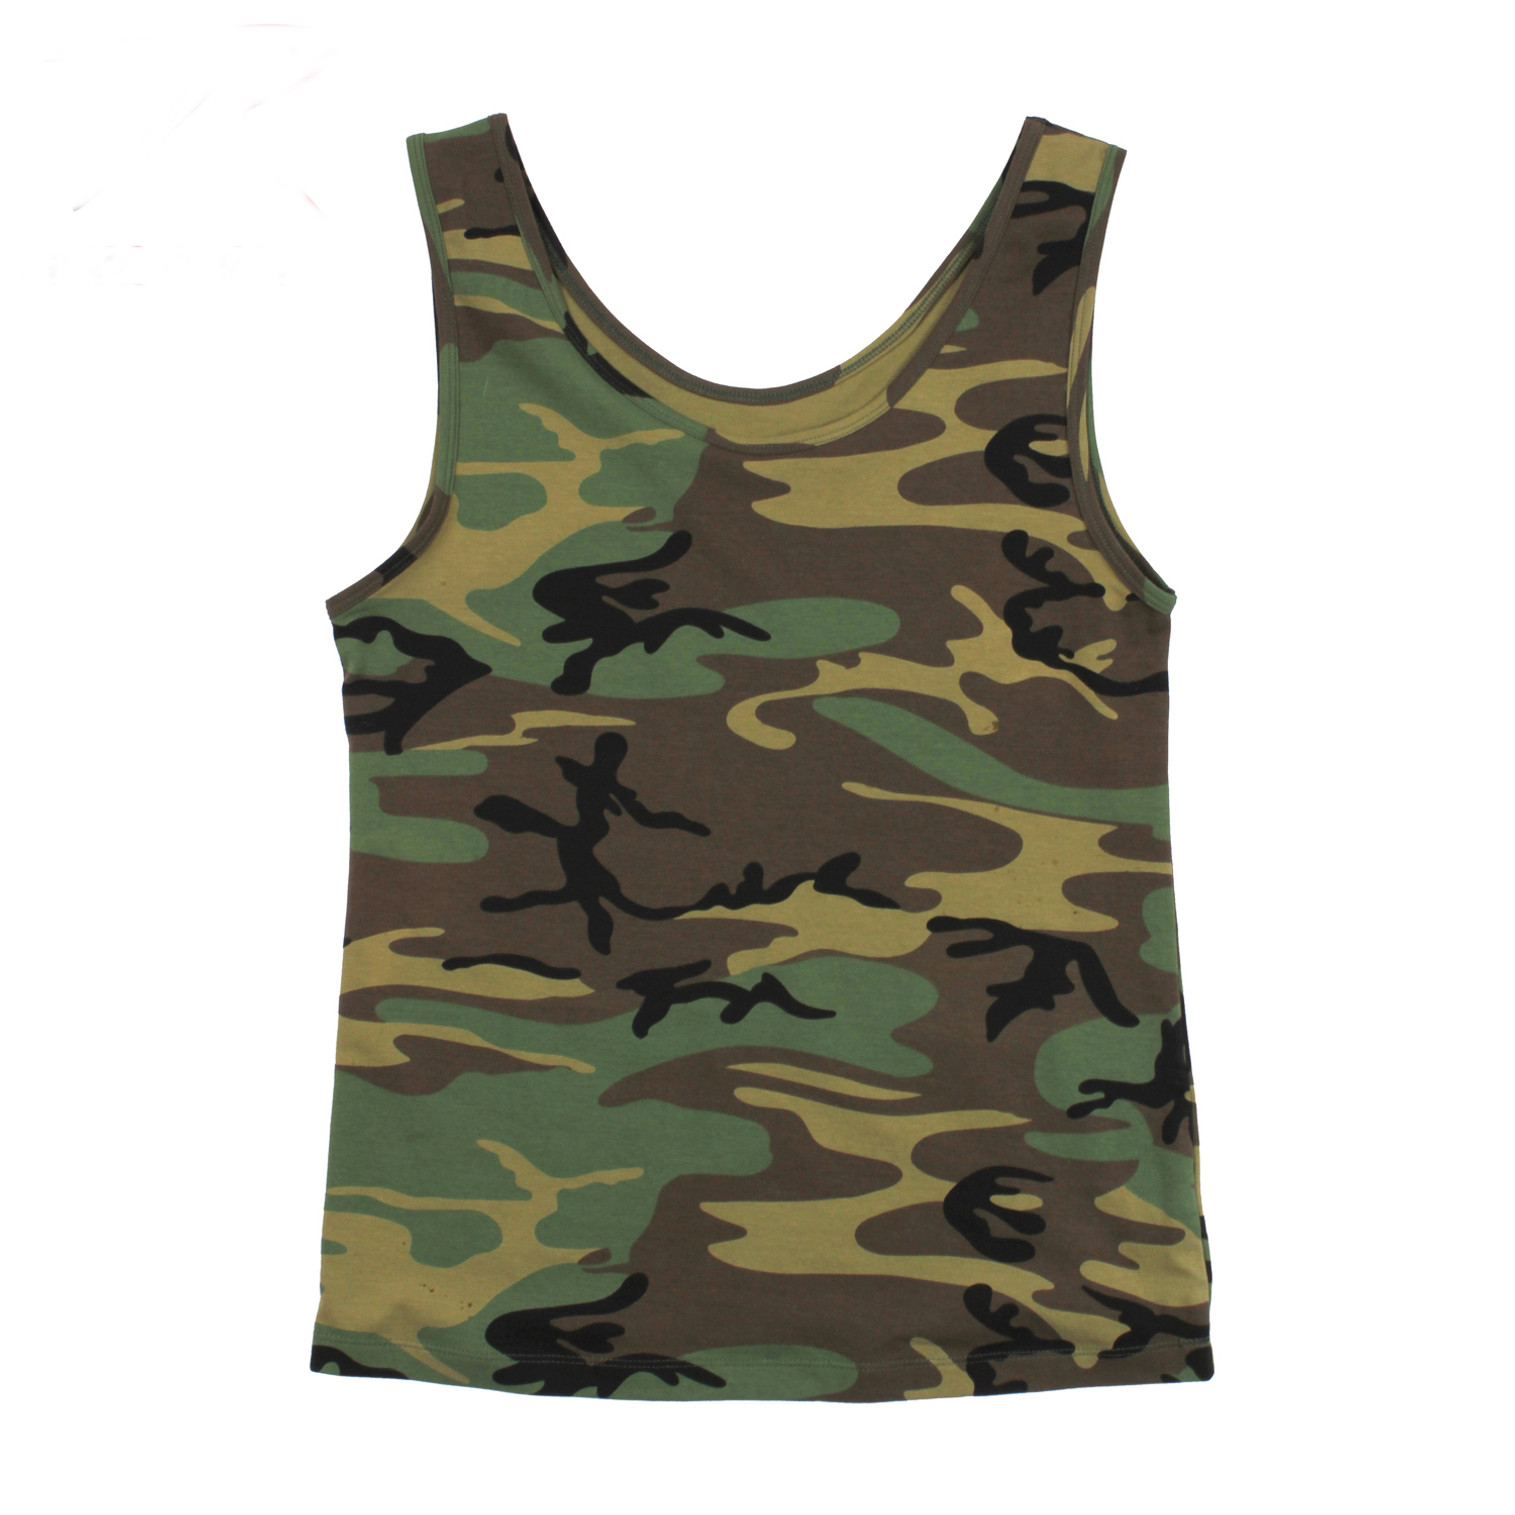 Hero Brand Men's Camouflage Tank Top - Woodland